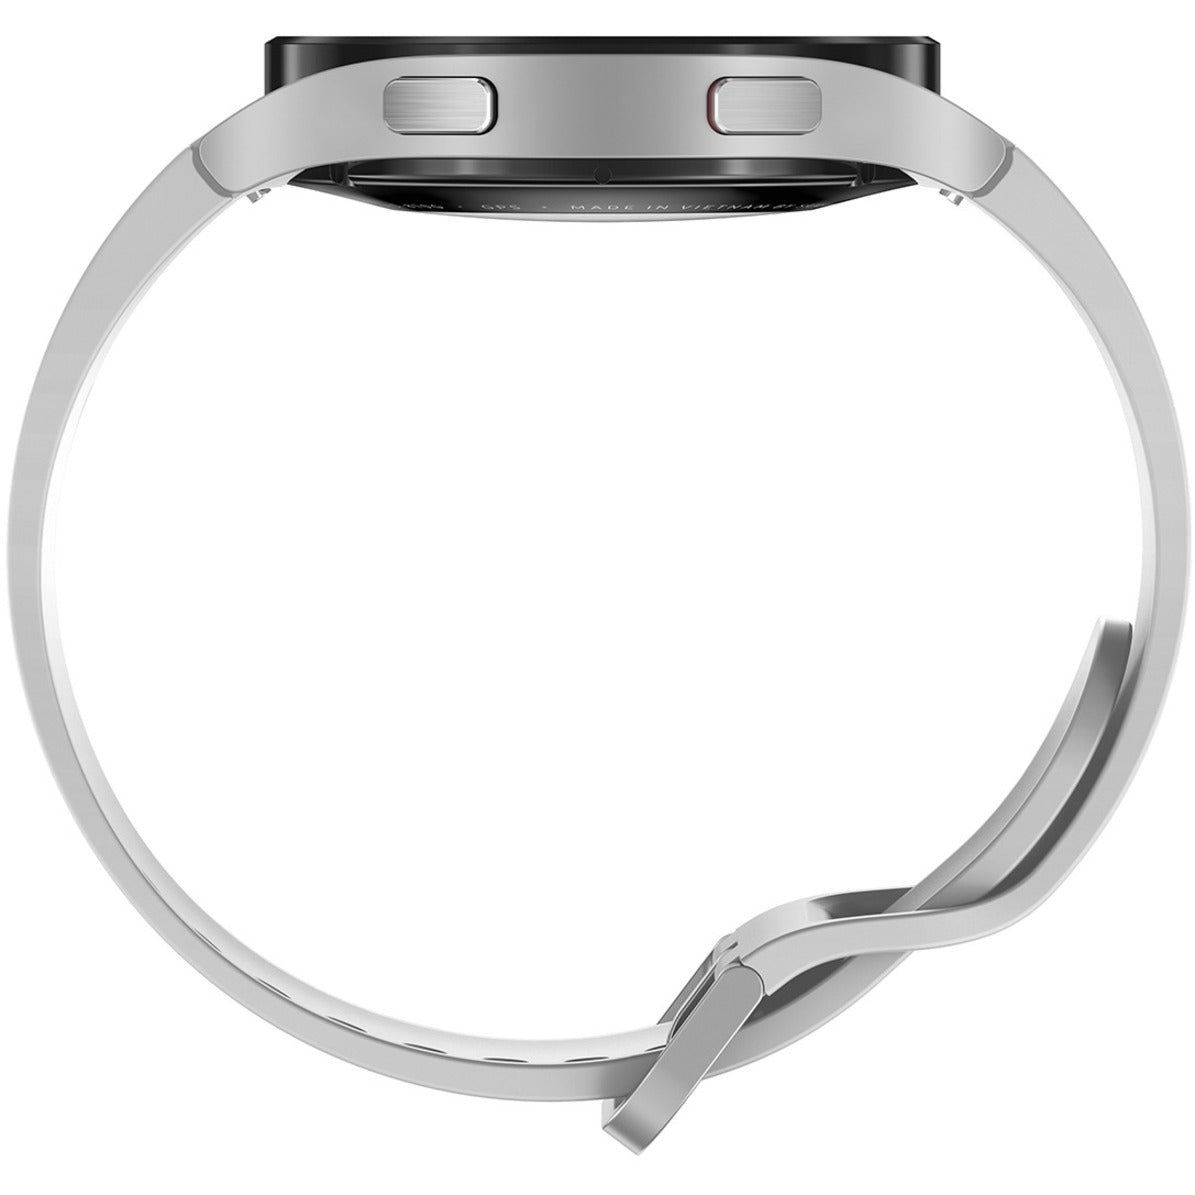 Samsung Galaxy Watch4 - 44mm Silver Bluetooth Smart Watch [Discontinued]